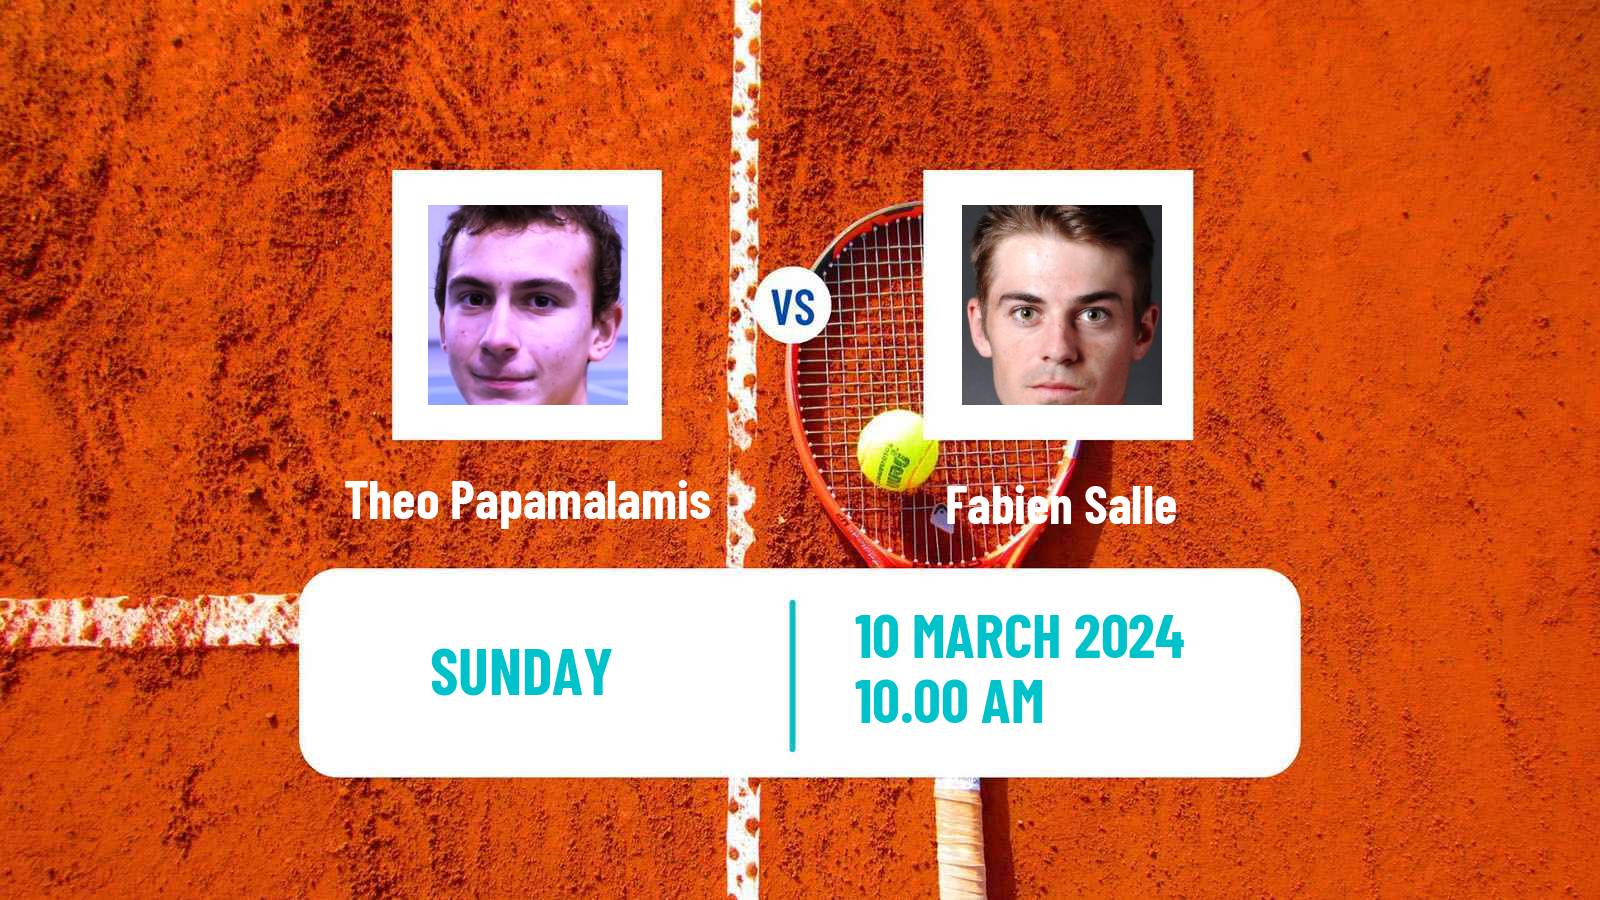 Tennis ITF M15 Poitiers Men Theo Papamalamis - Fabien Salle